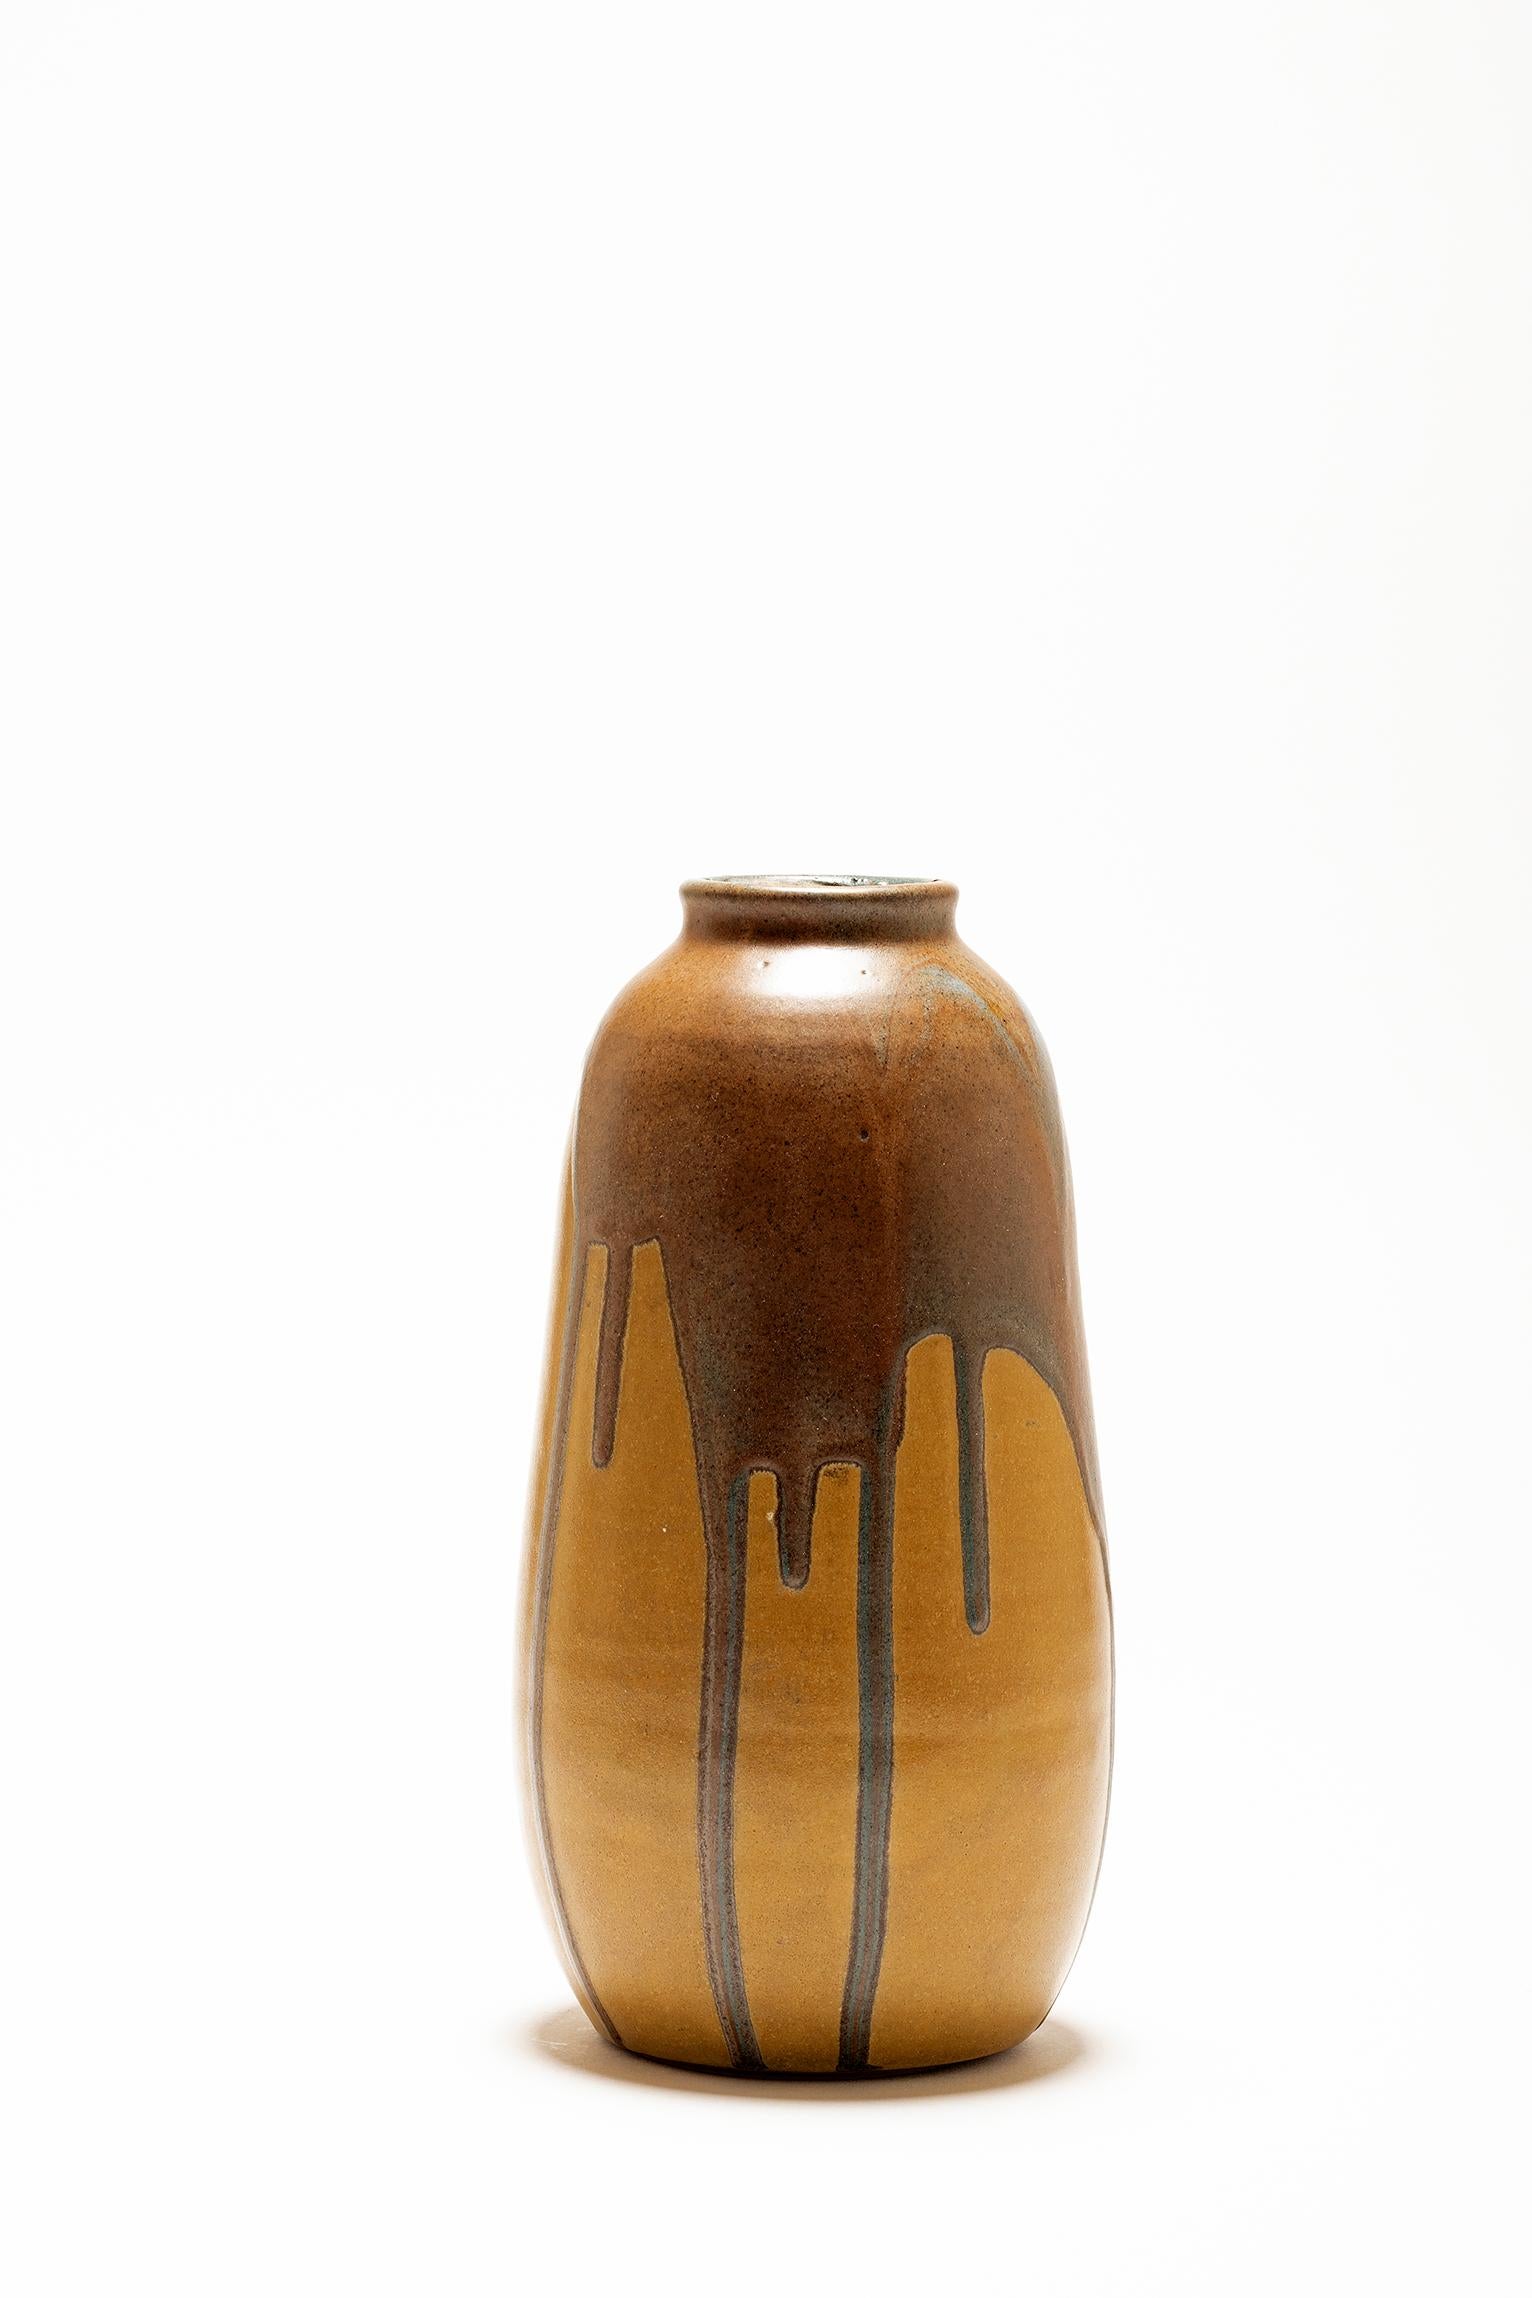 20th Century Art Deco Polychrome Glazed Ceramic Vase by Leon Pointu